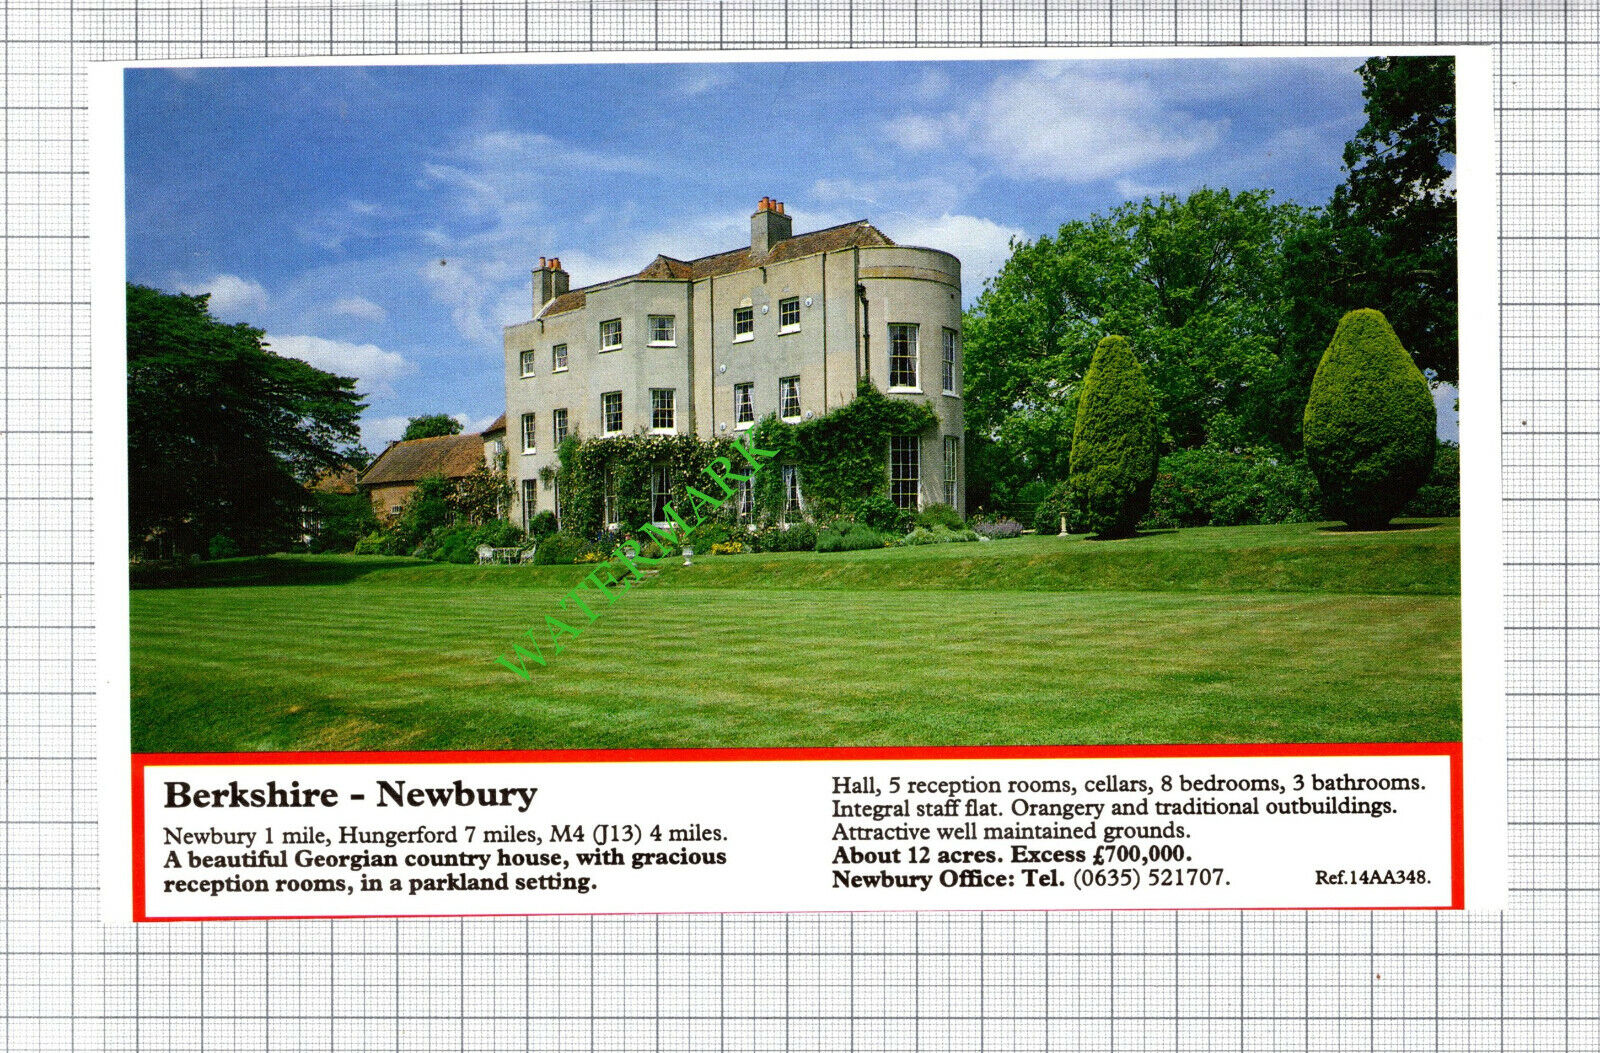 Newbury Berkshire House Sale Advert - 1991 Cutting